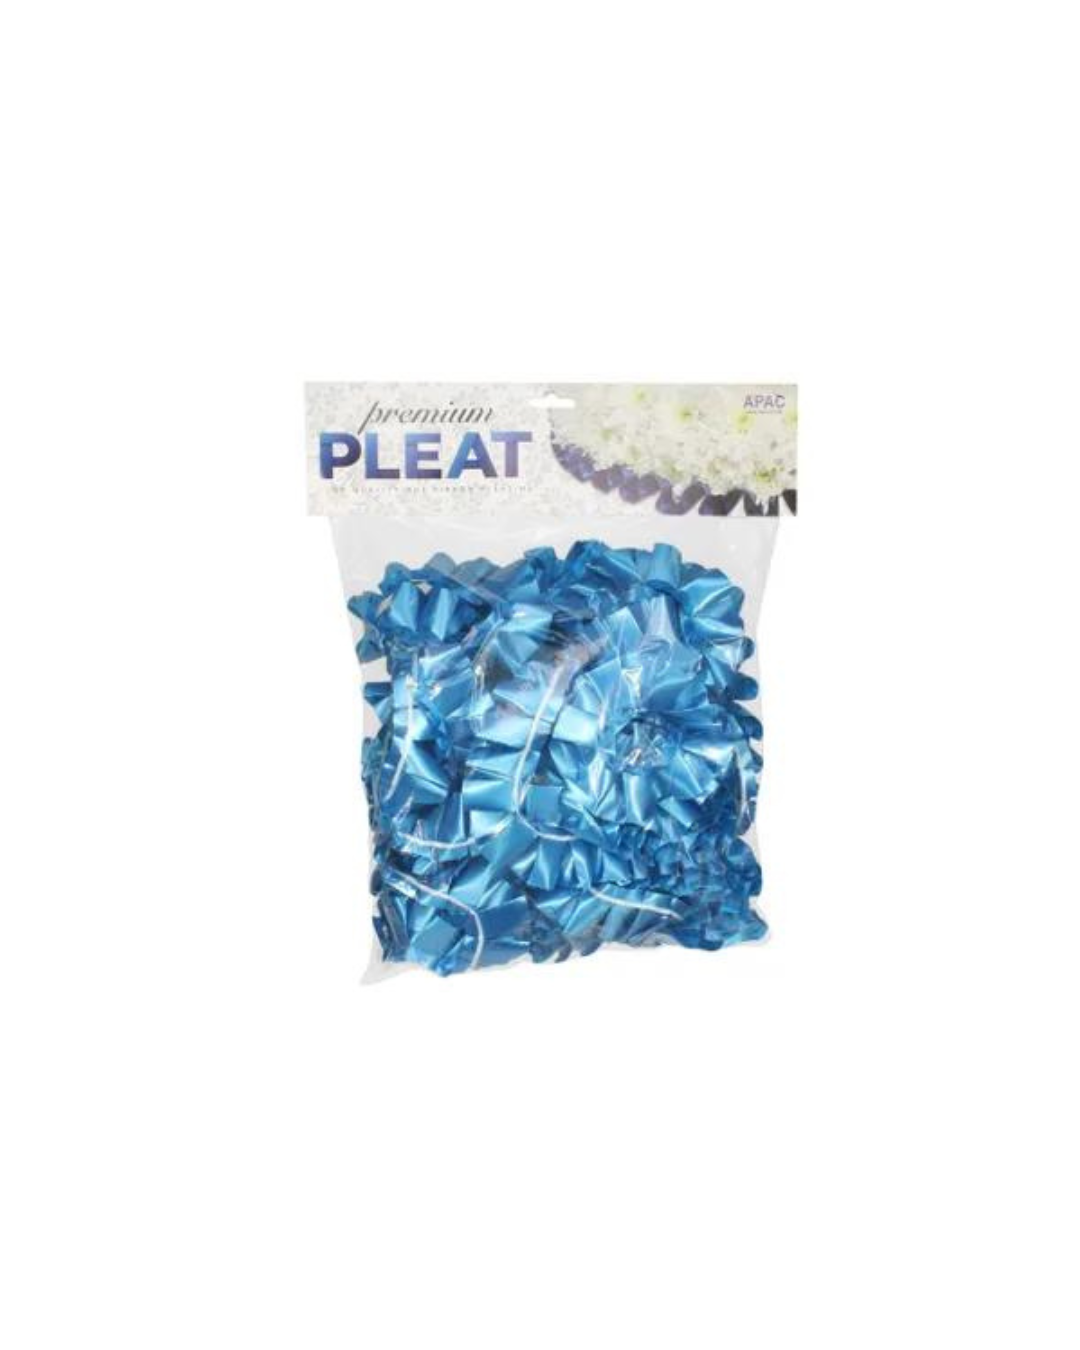 Premium Pleat Ribbon